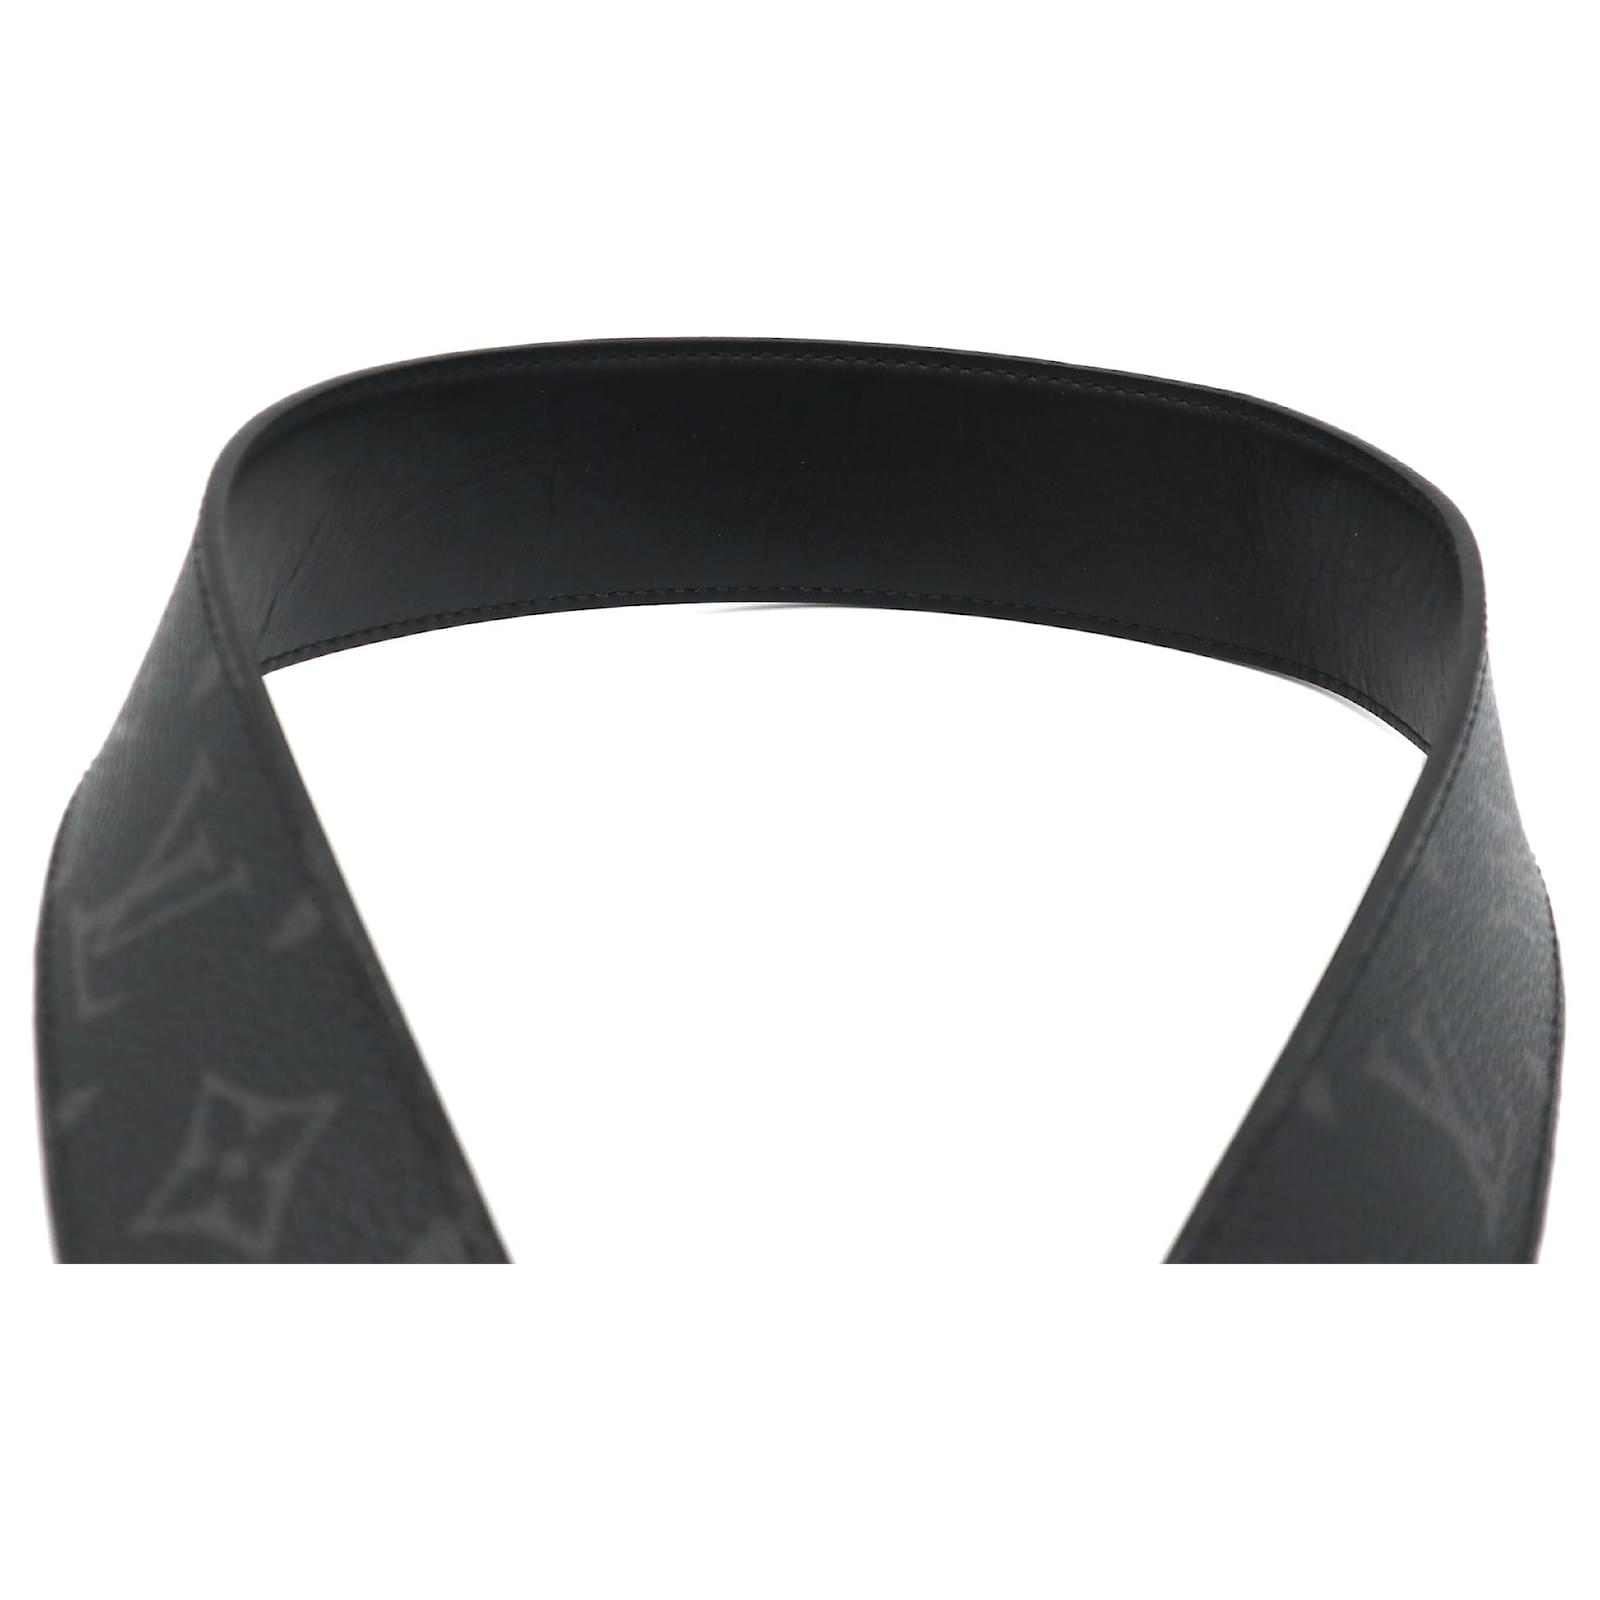 LV Circle 40MM Reversible Leather/Eclipse Belt Size 95/38 – Keeks